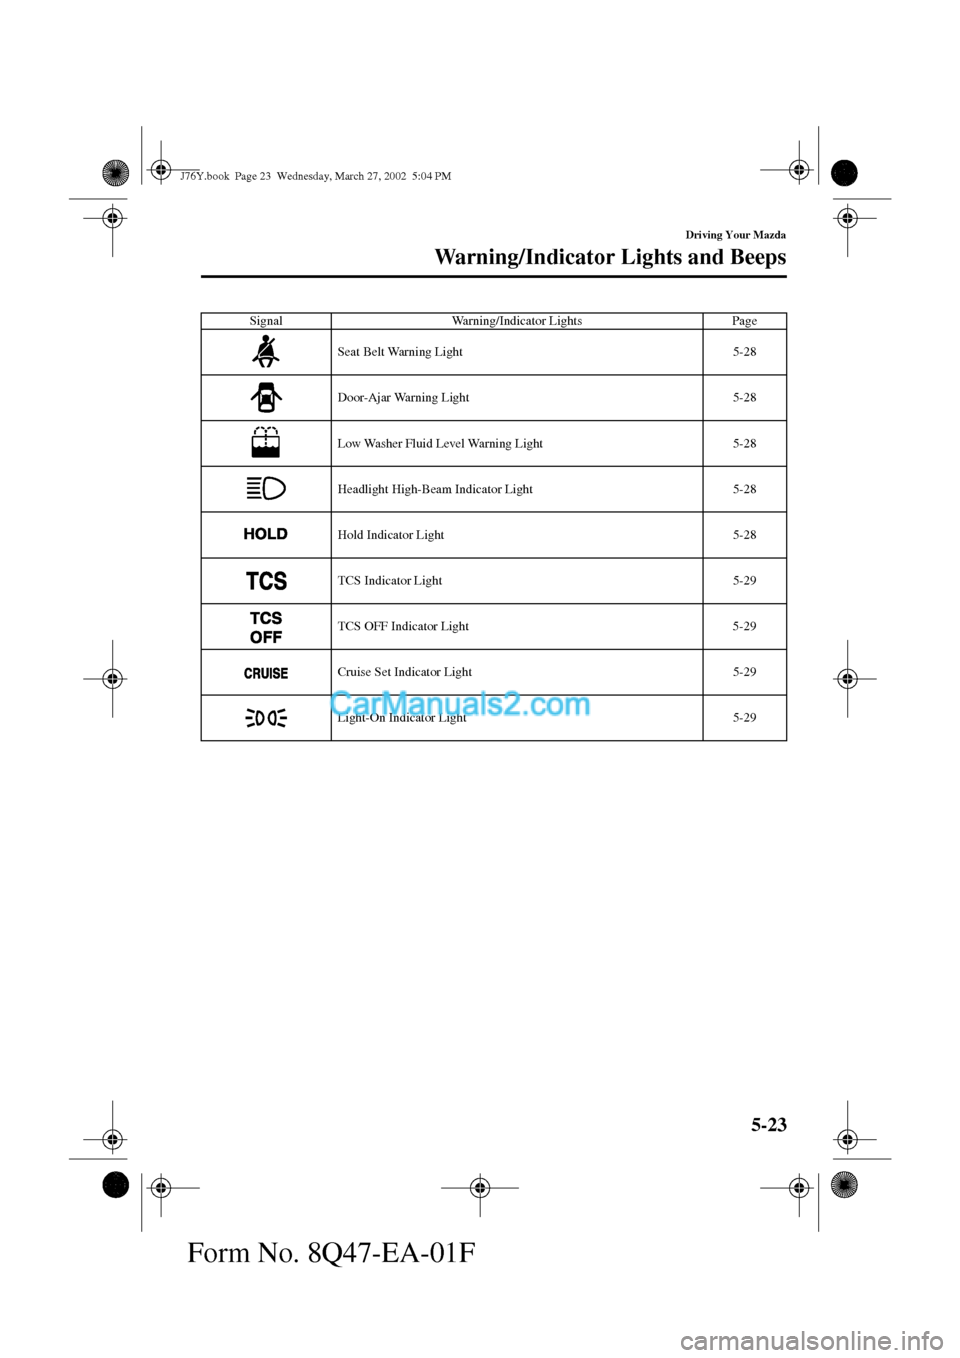 MAZDA MODEL MILLENIA 2002   (in English) Owners Guide 5-23
Driving Your Mazda
Warning/Indicator Lights and Beeps
Form No. 8Q47-EA-01F
Seat Belt Warning Light 5-28
Door-Ajar Warning Light 5-28
Low Washer Fluid Level Warning Light 5-28
Headlight High-Beam 